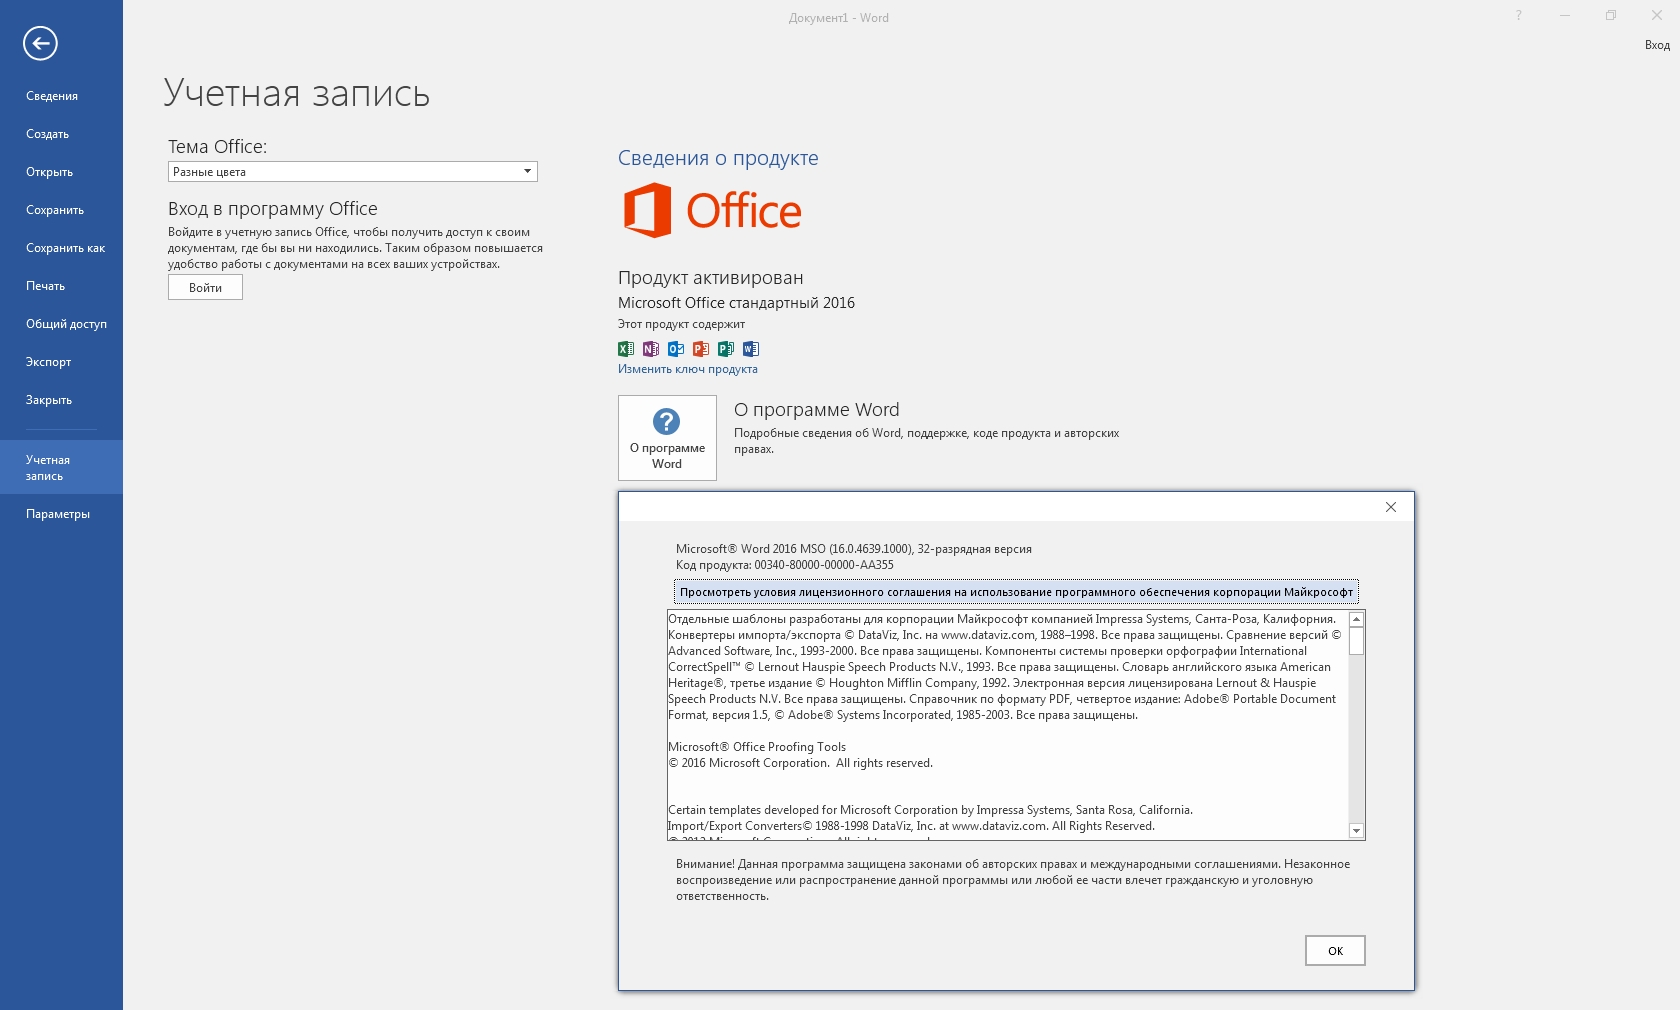 Microsoft office 2016 by kpojiuk. Microsoft Office 2016 офисные пакеты. Microsoft Office 2016 Standard Word. Ключи для активации ворд офис. Microsoft Office 2016 Скриншоты.